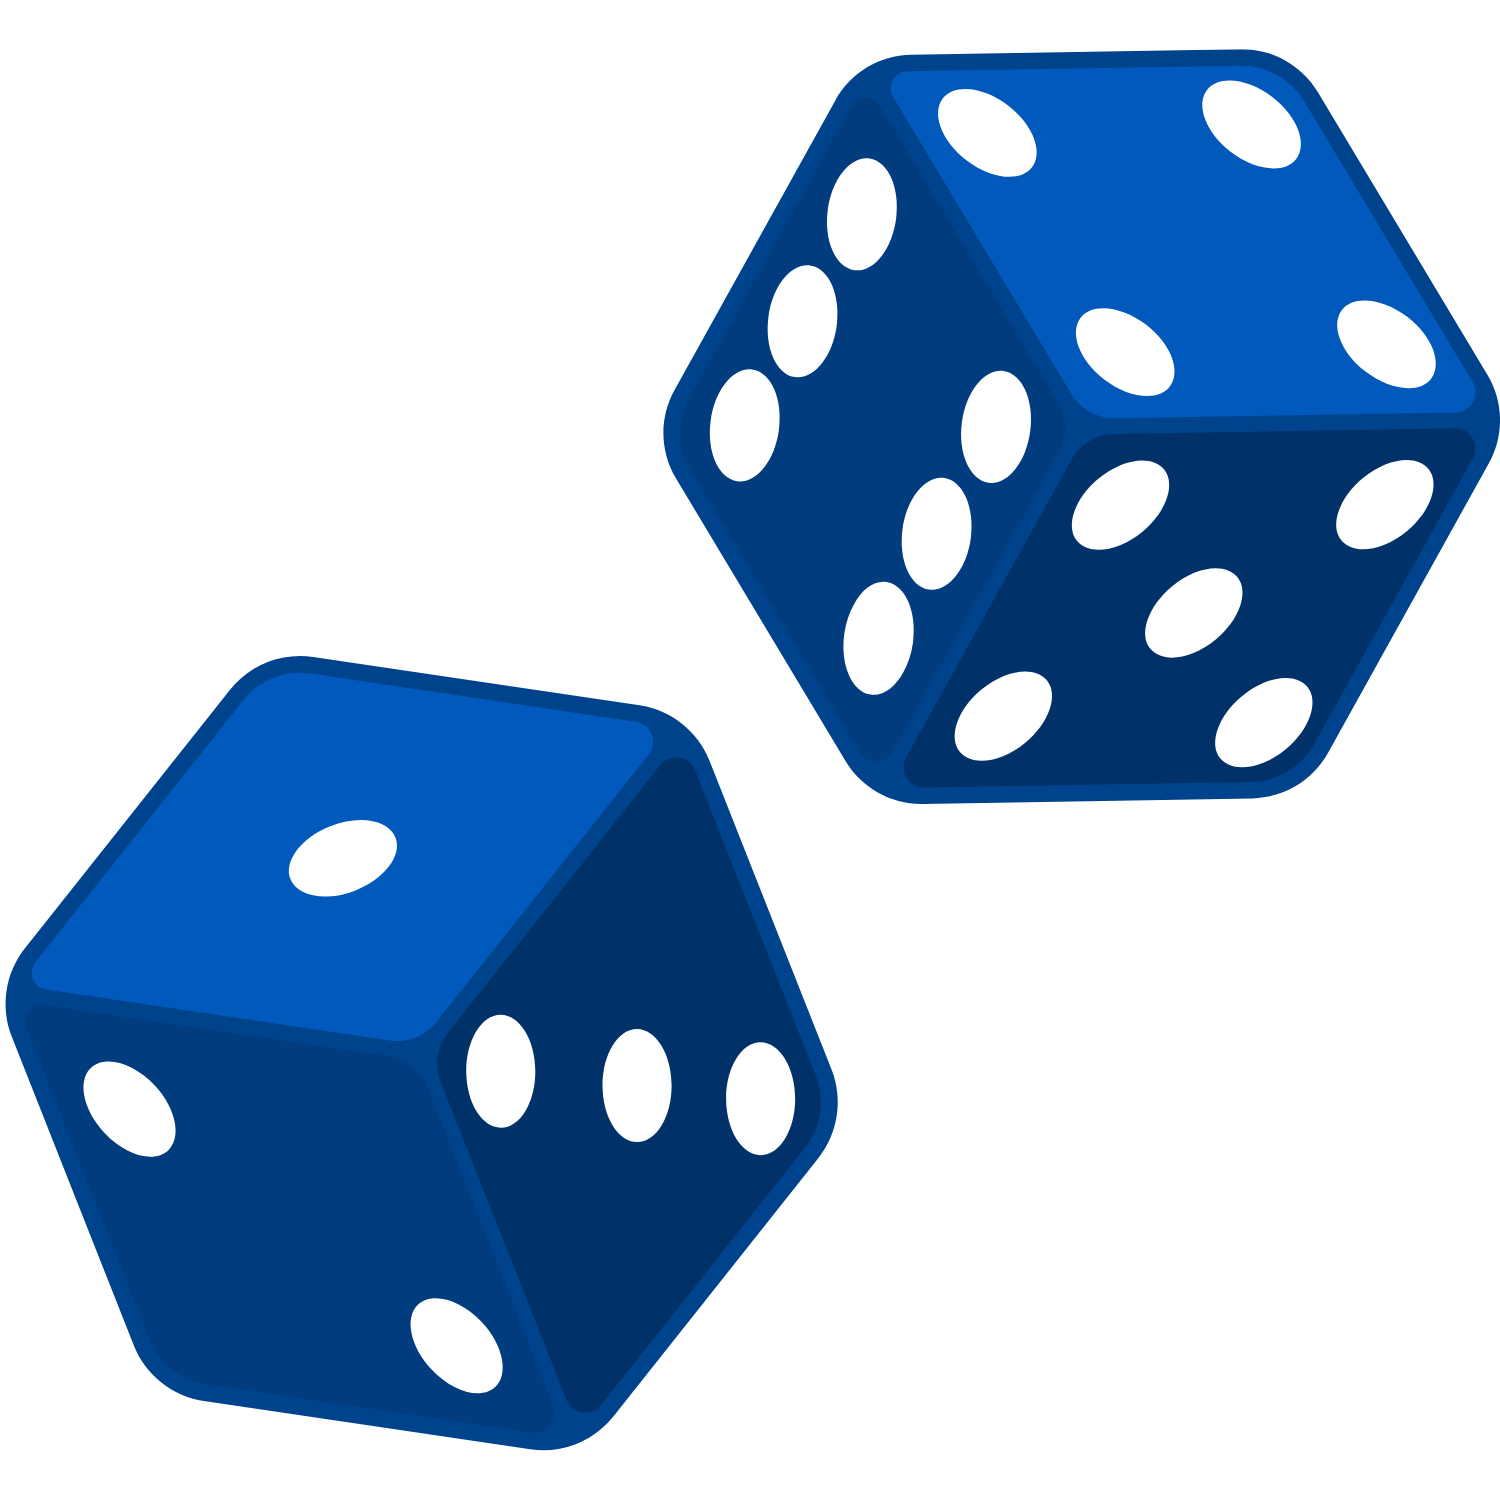 Blue dices